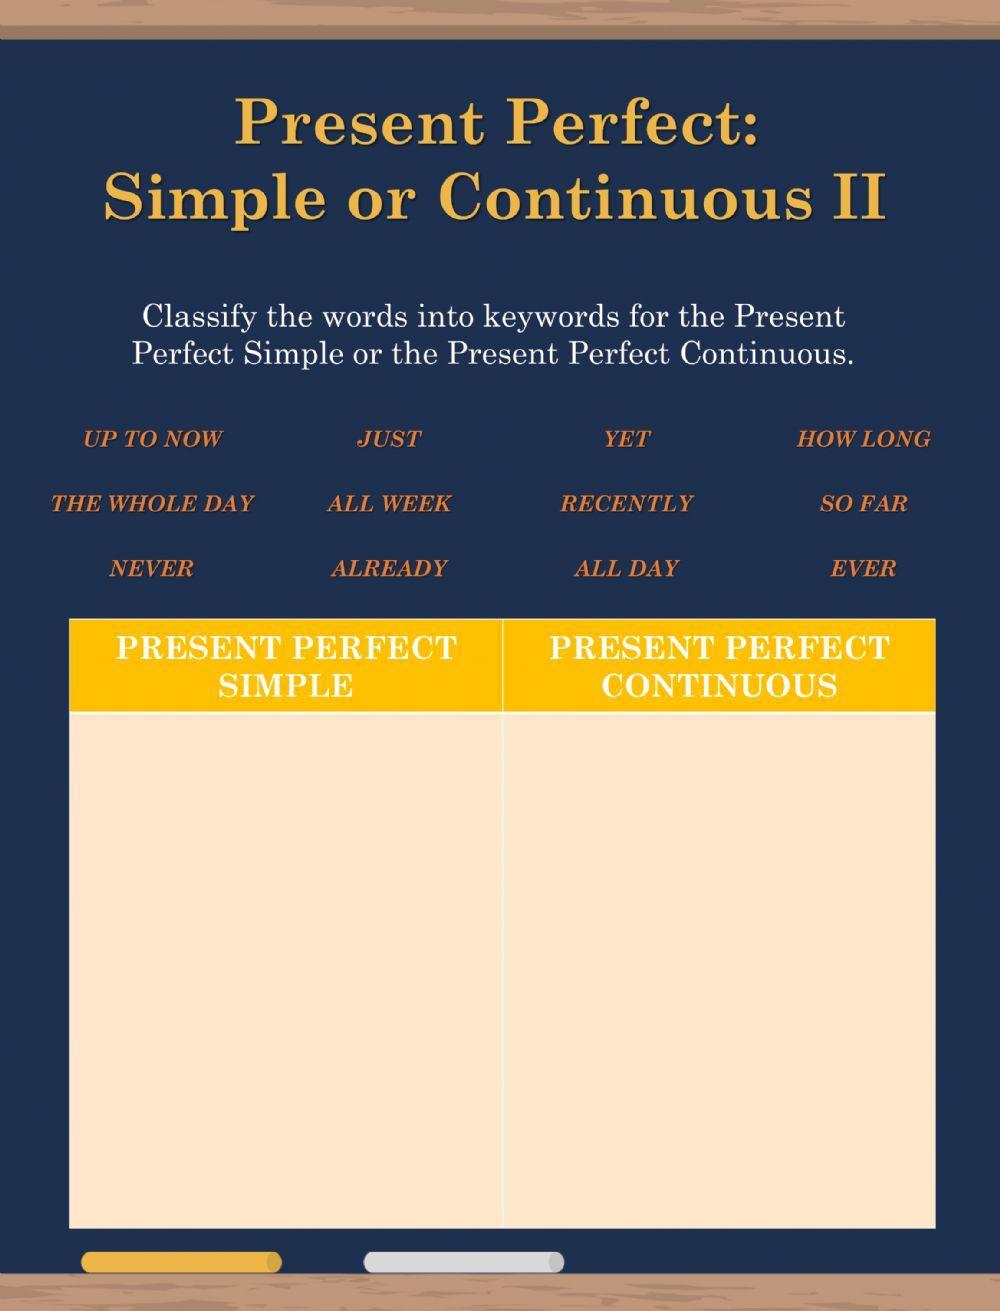 Present Perfect Simple vs Continuous II